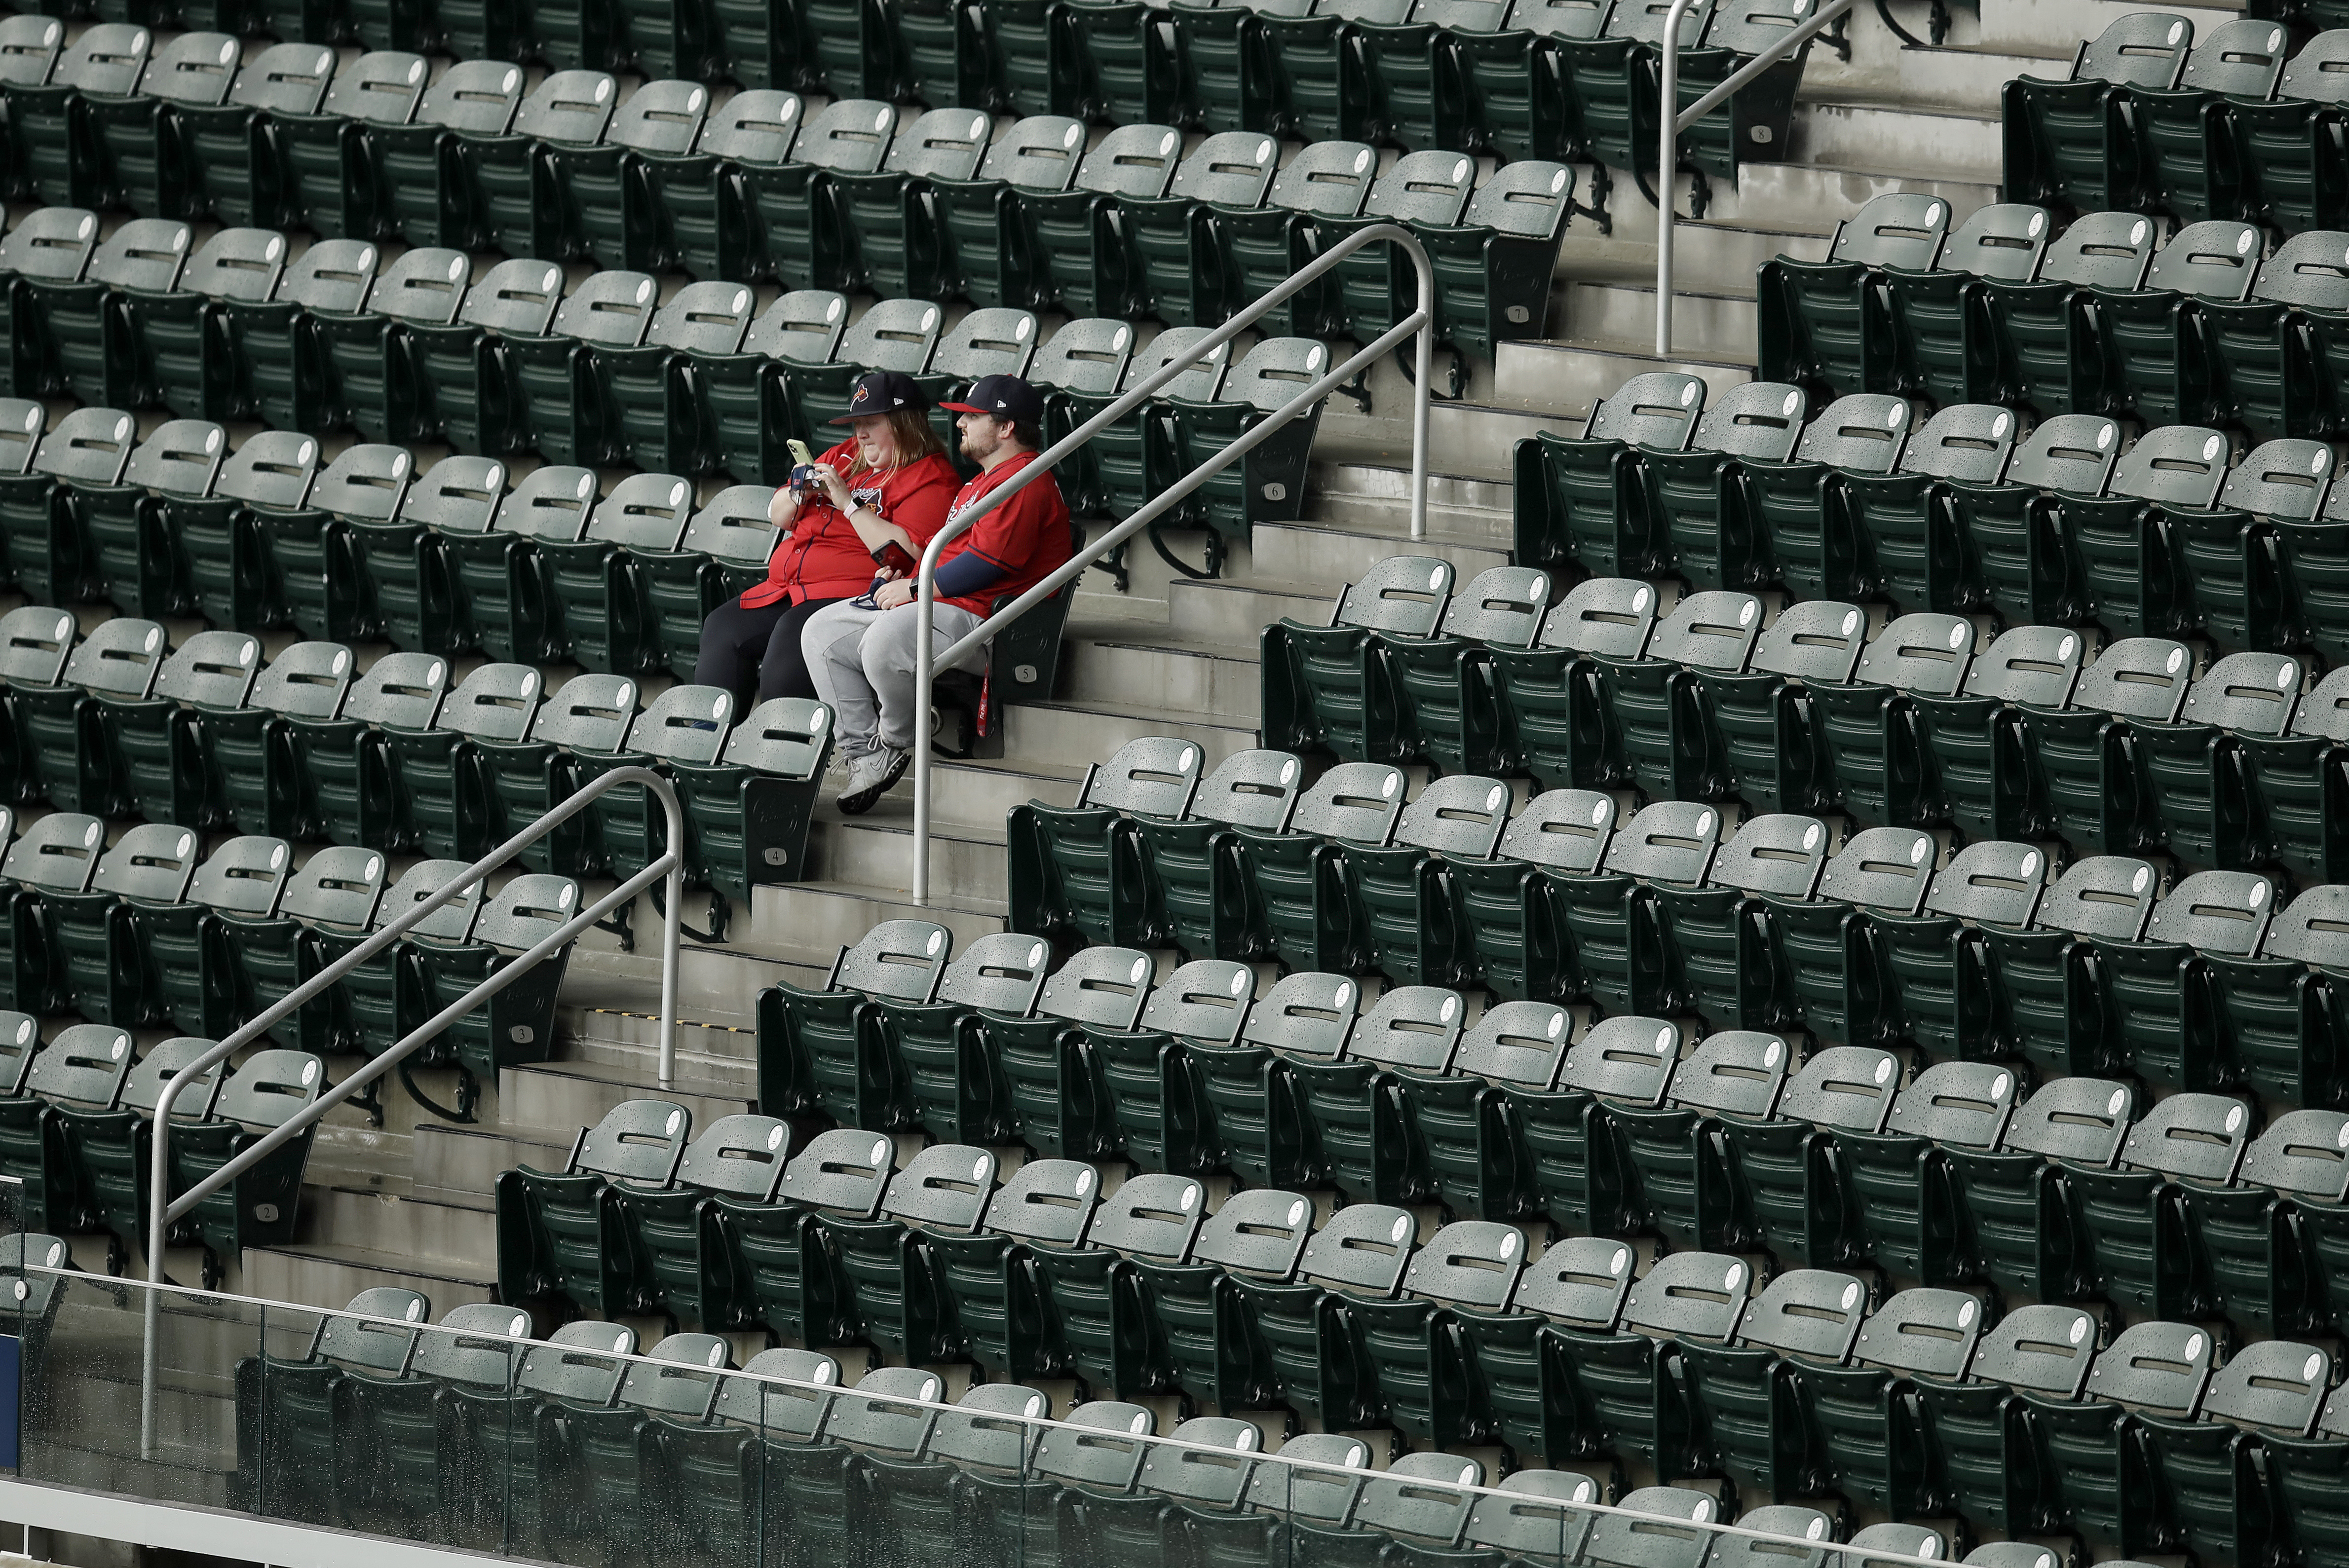 Atlanta Braves return to 100% seating capacity 